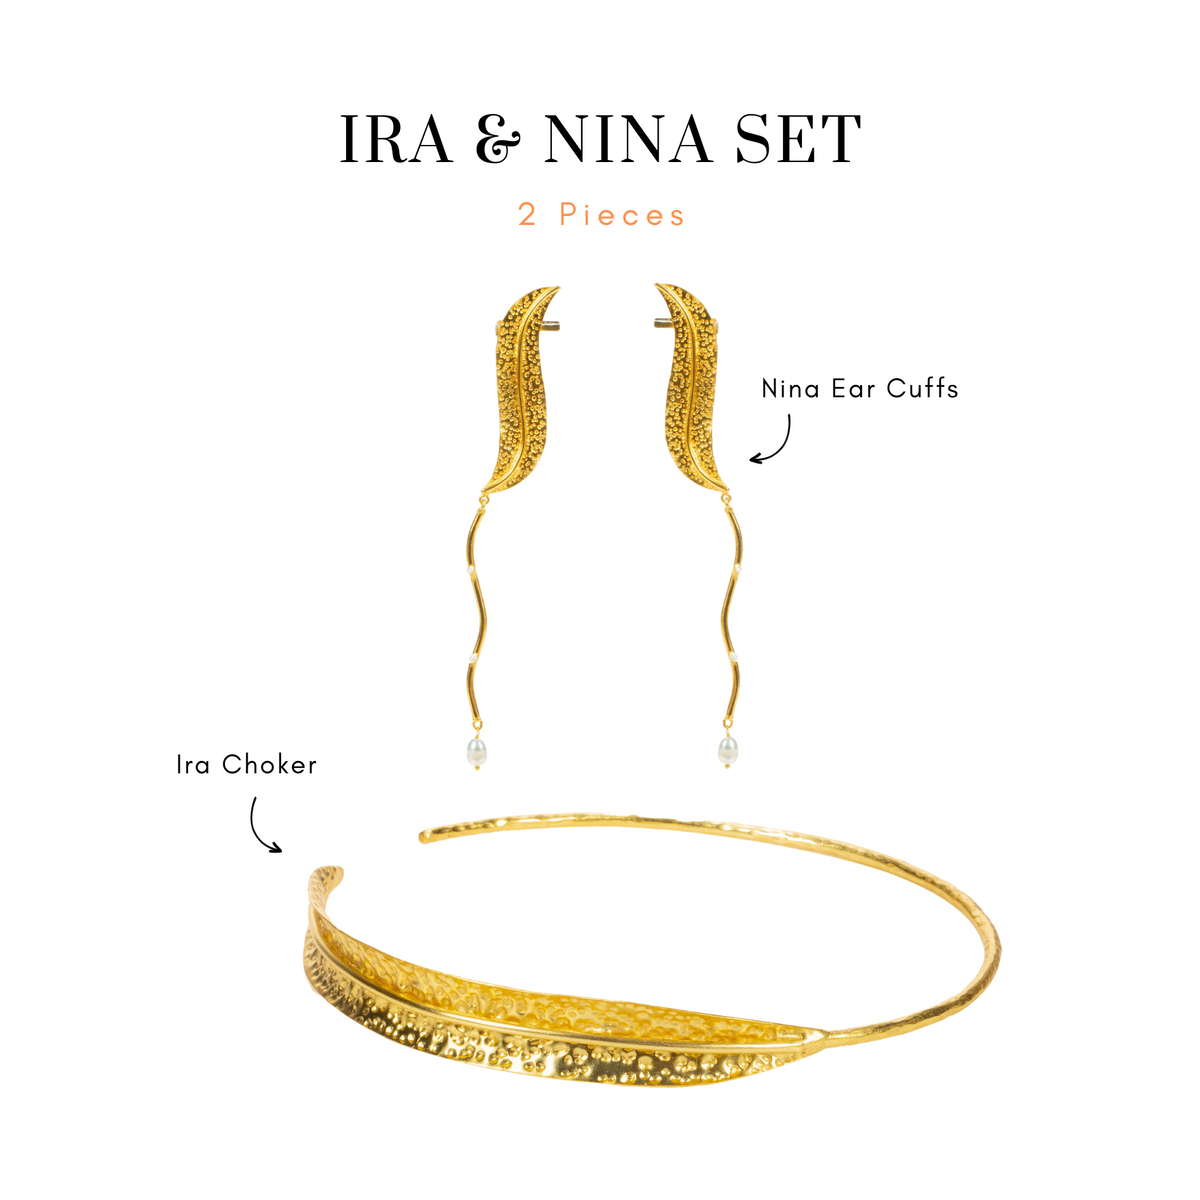 Ira & Nina Set